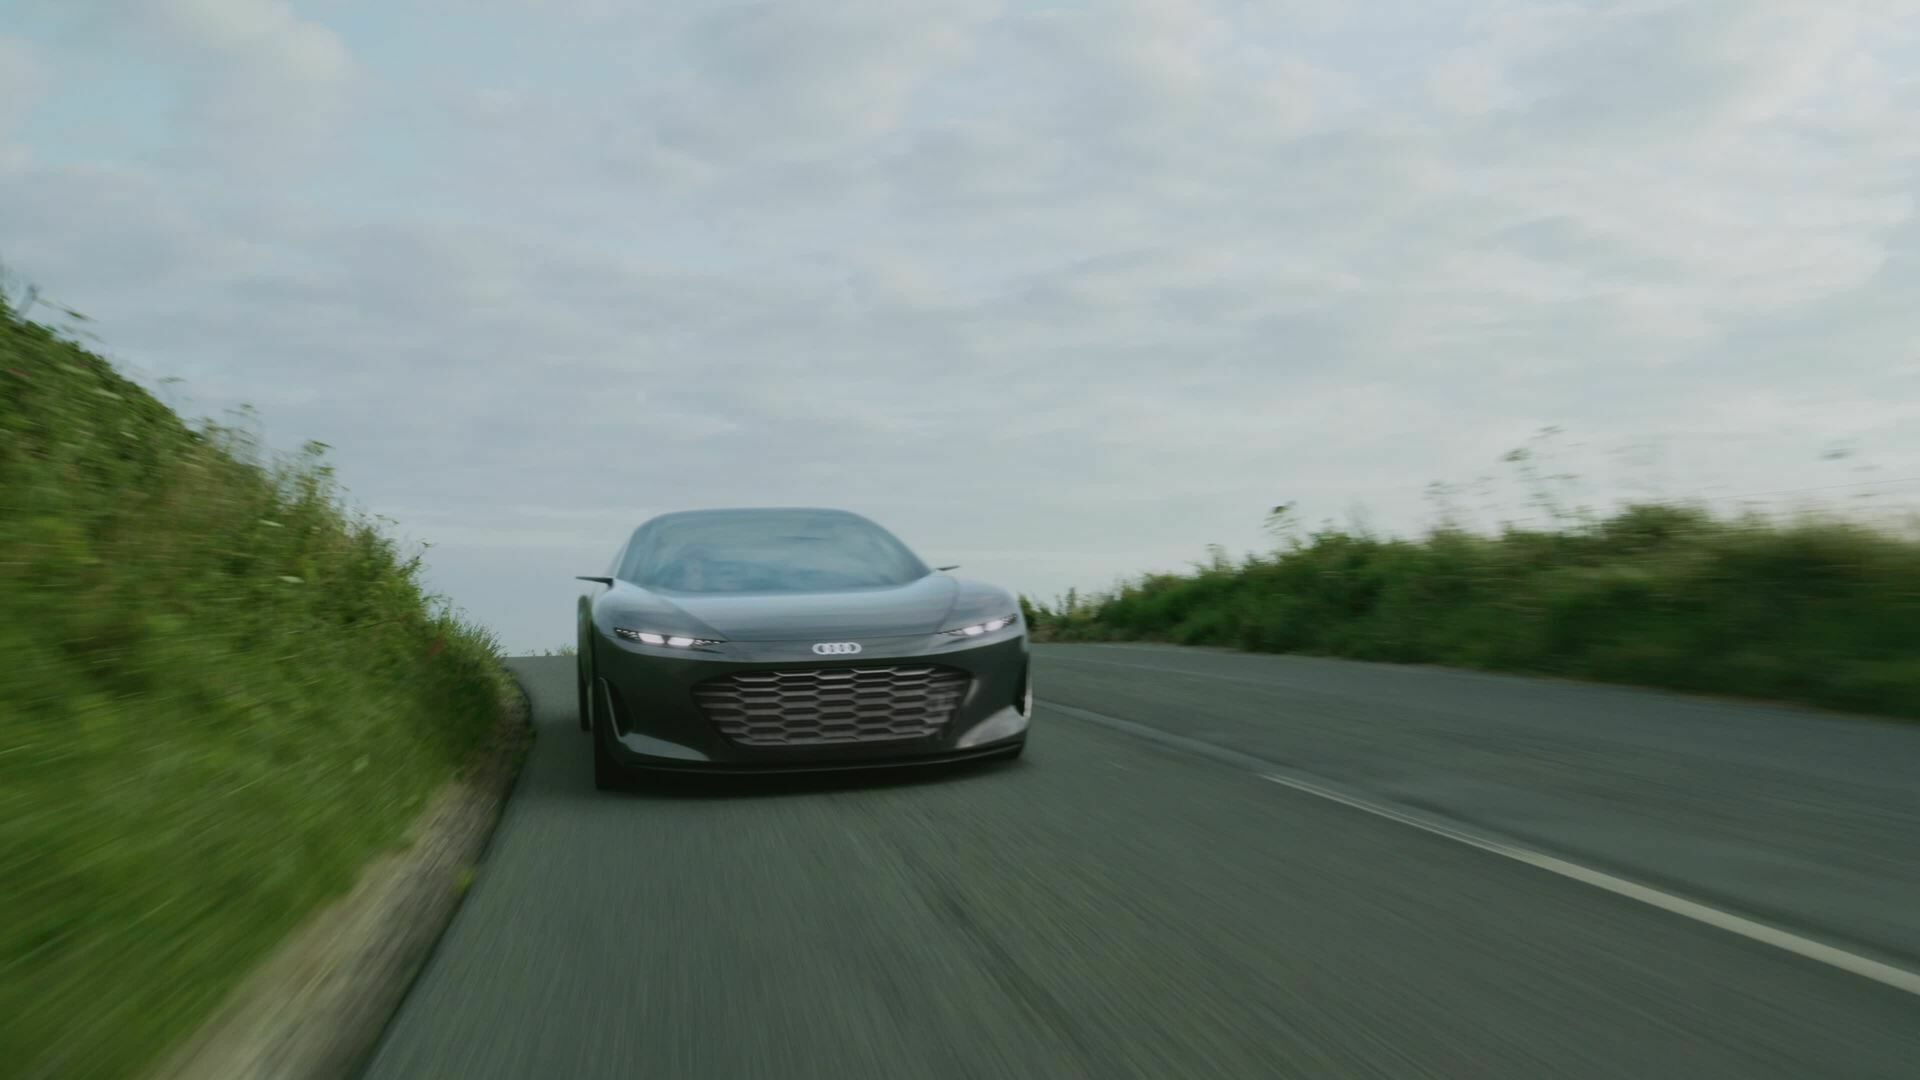 Footage: Driving scenes of the Audi grandsphere concept